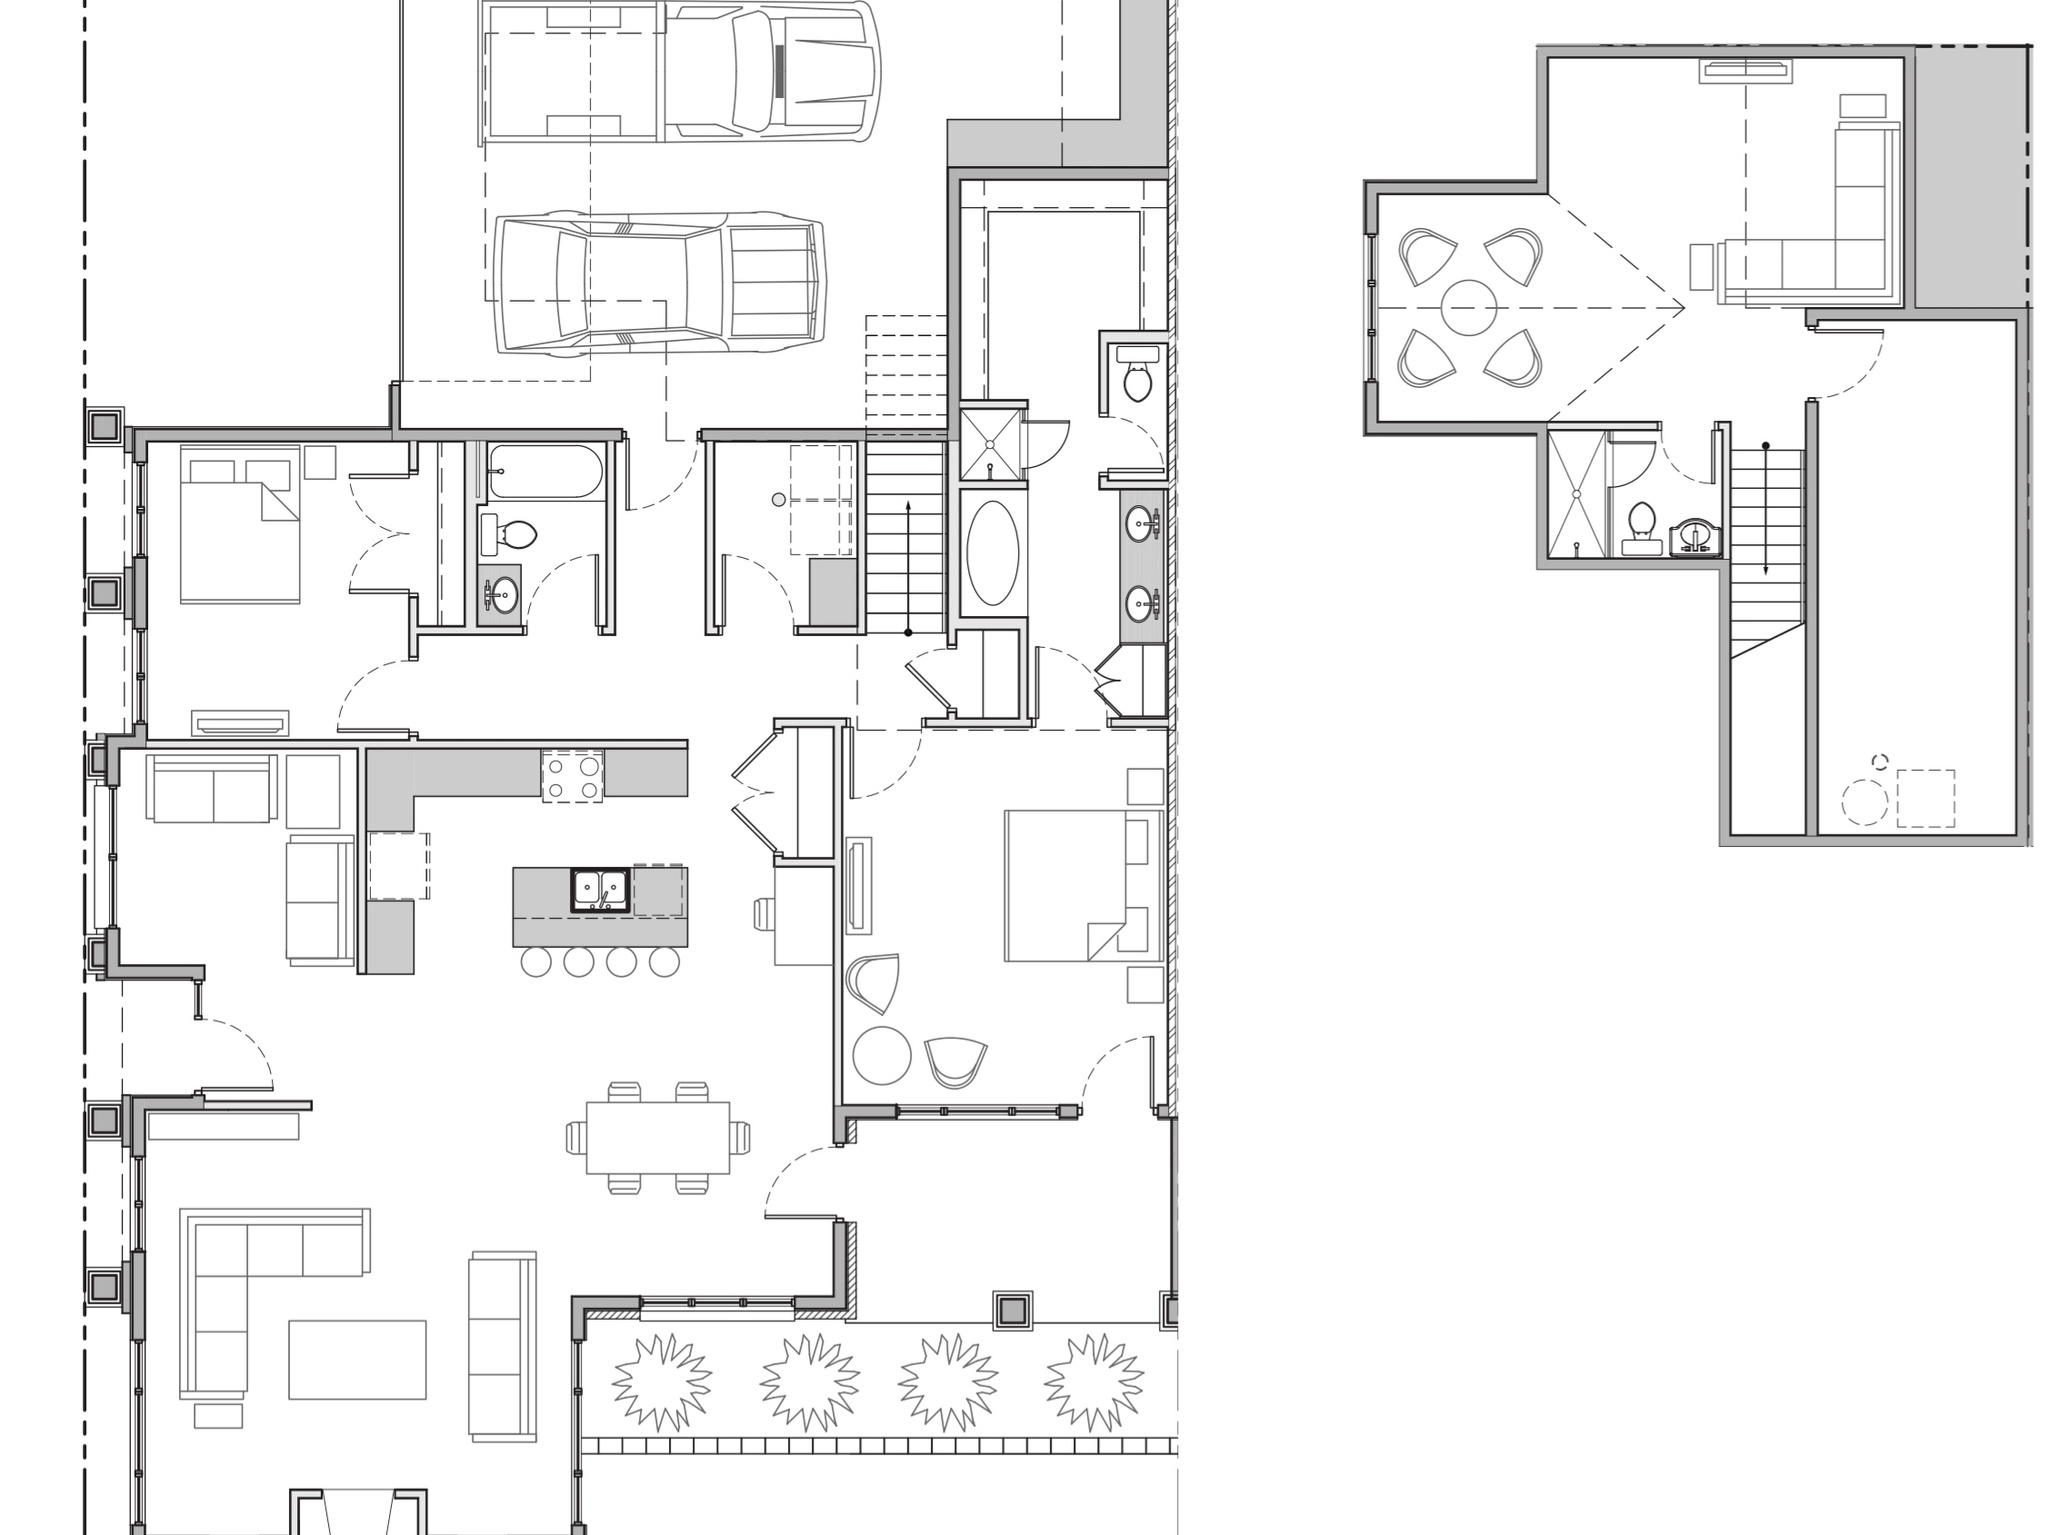 Floor plan- Slate 2-3 bedroom plus bonus room plan and full unfinished basement